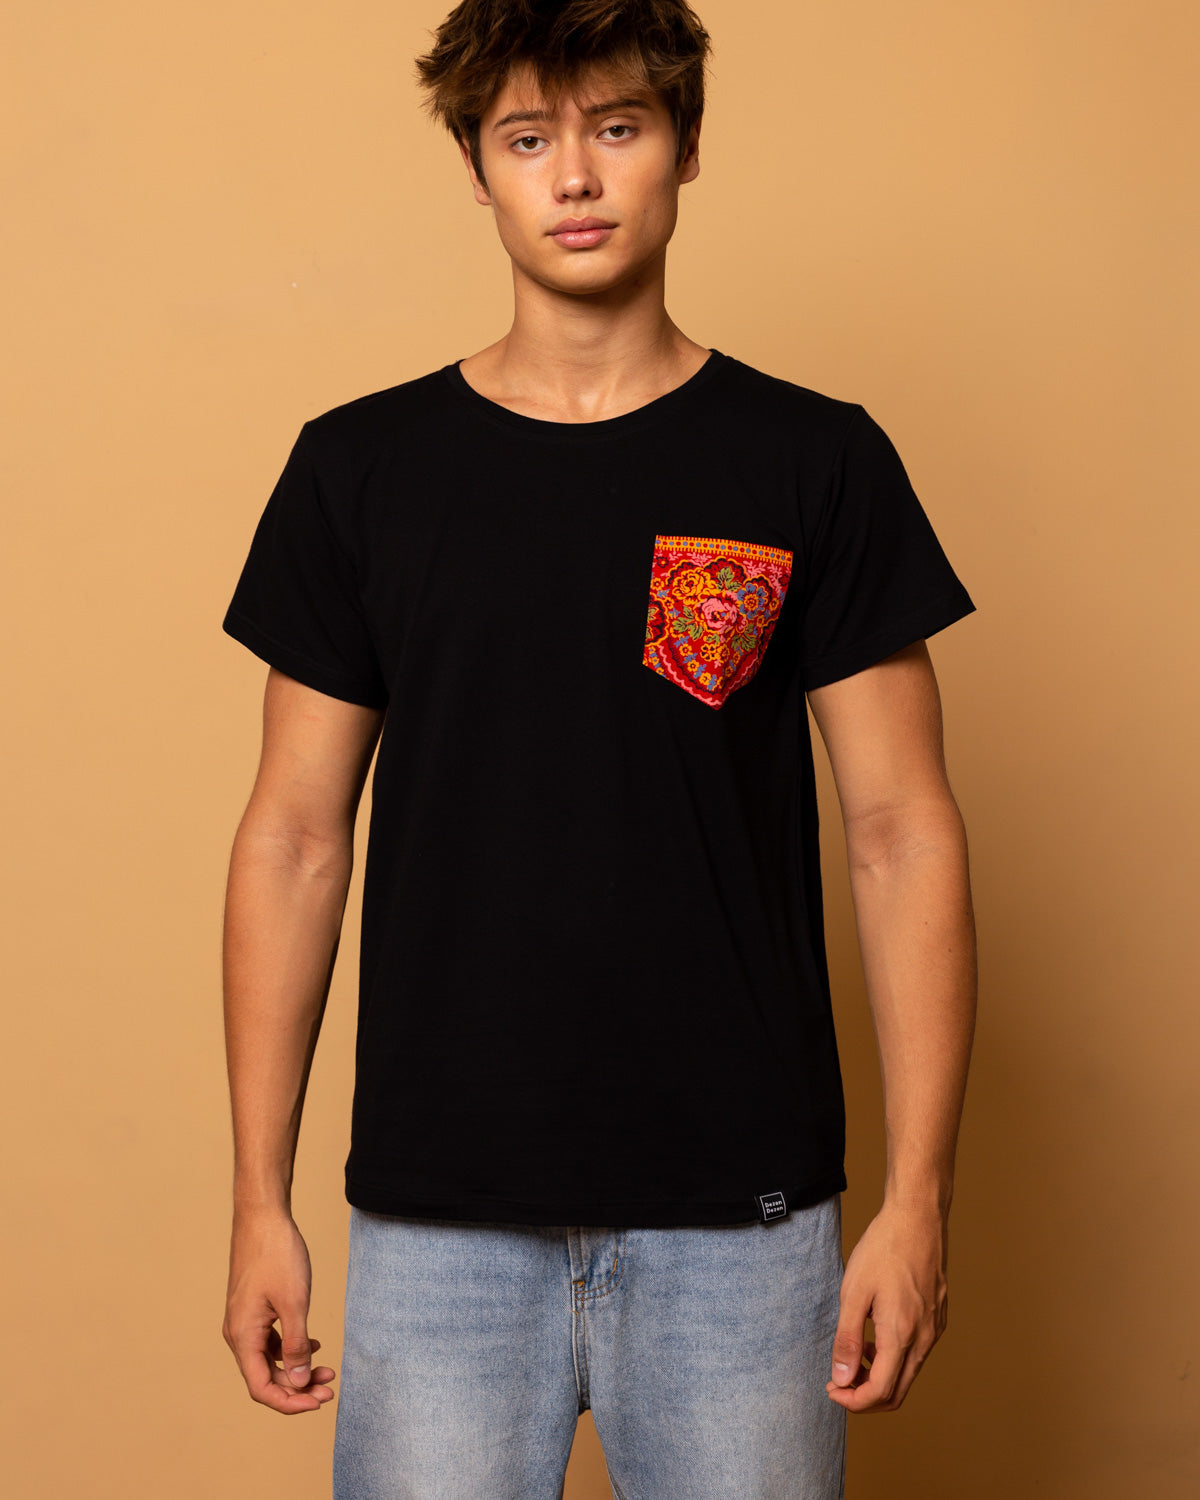 Unisex Black T-shirt with pocket